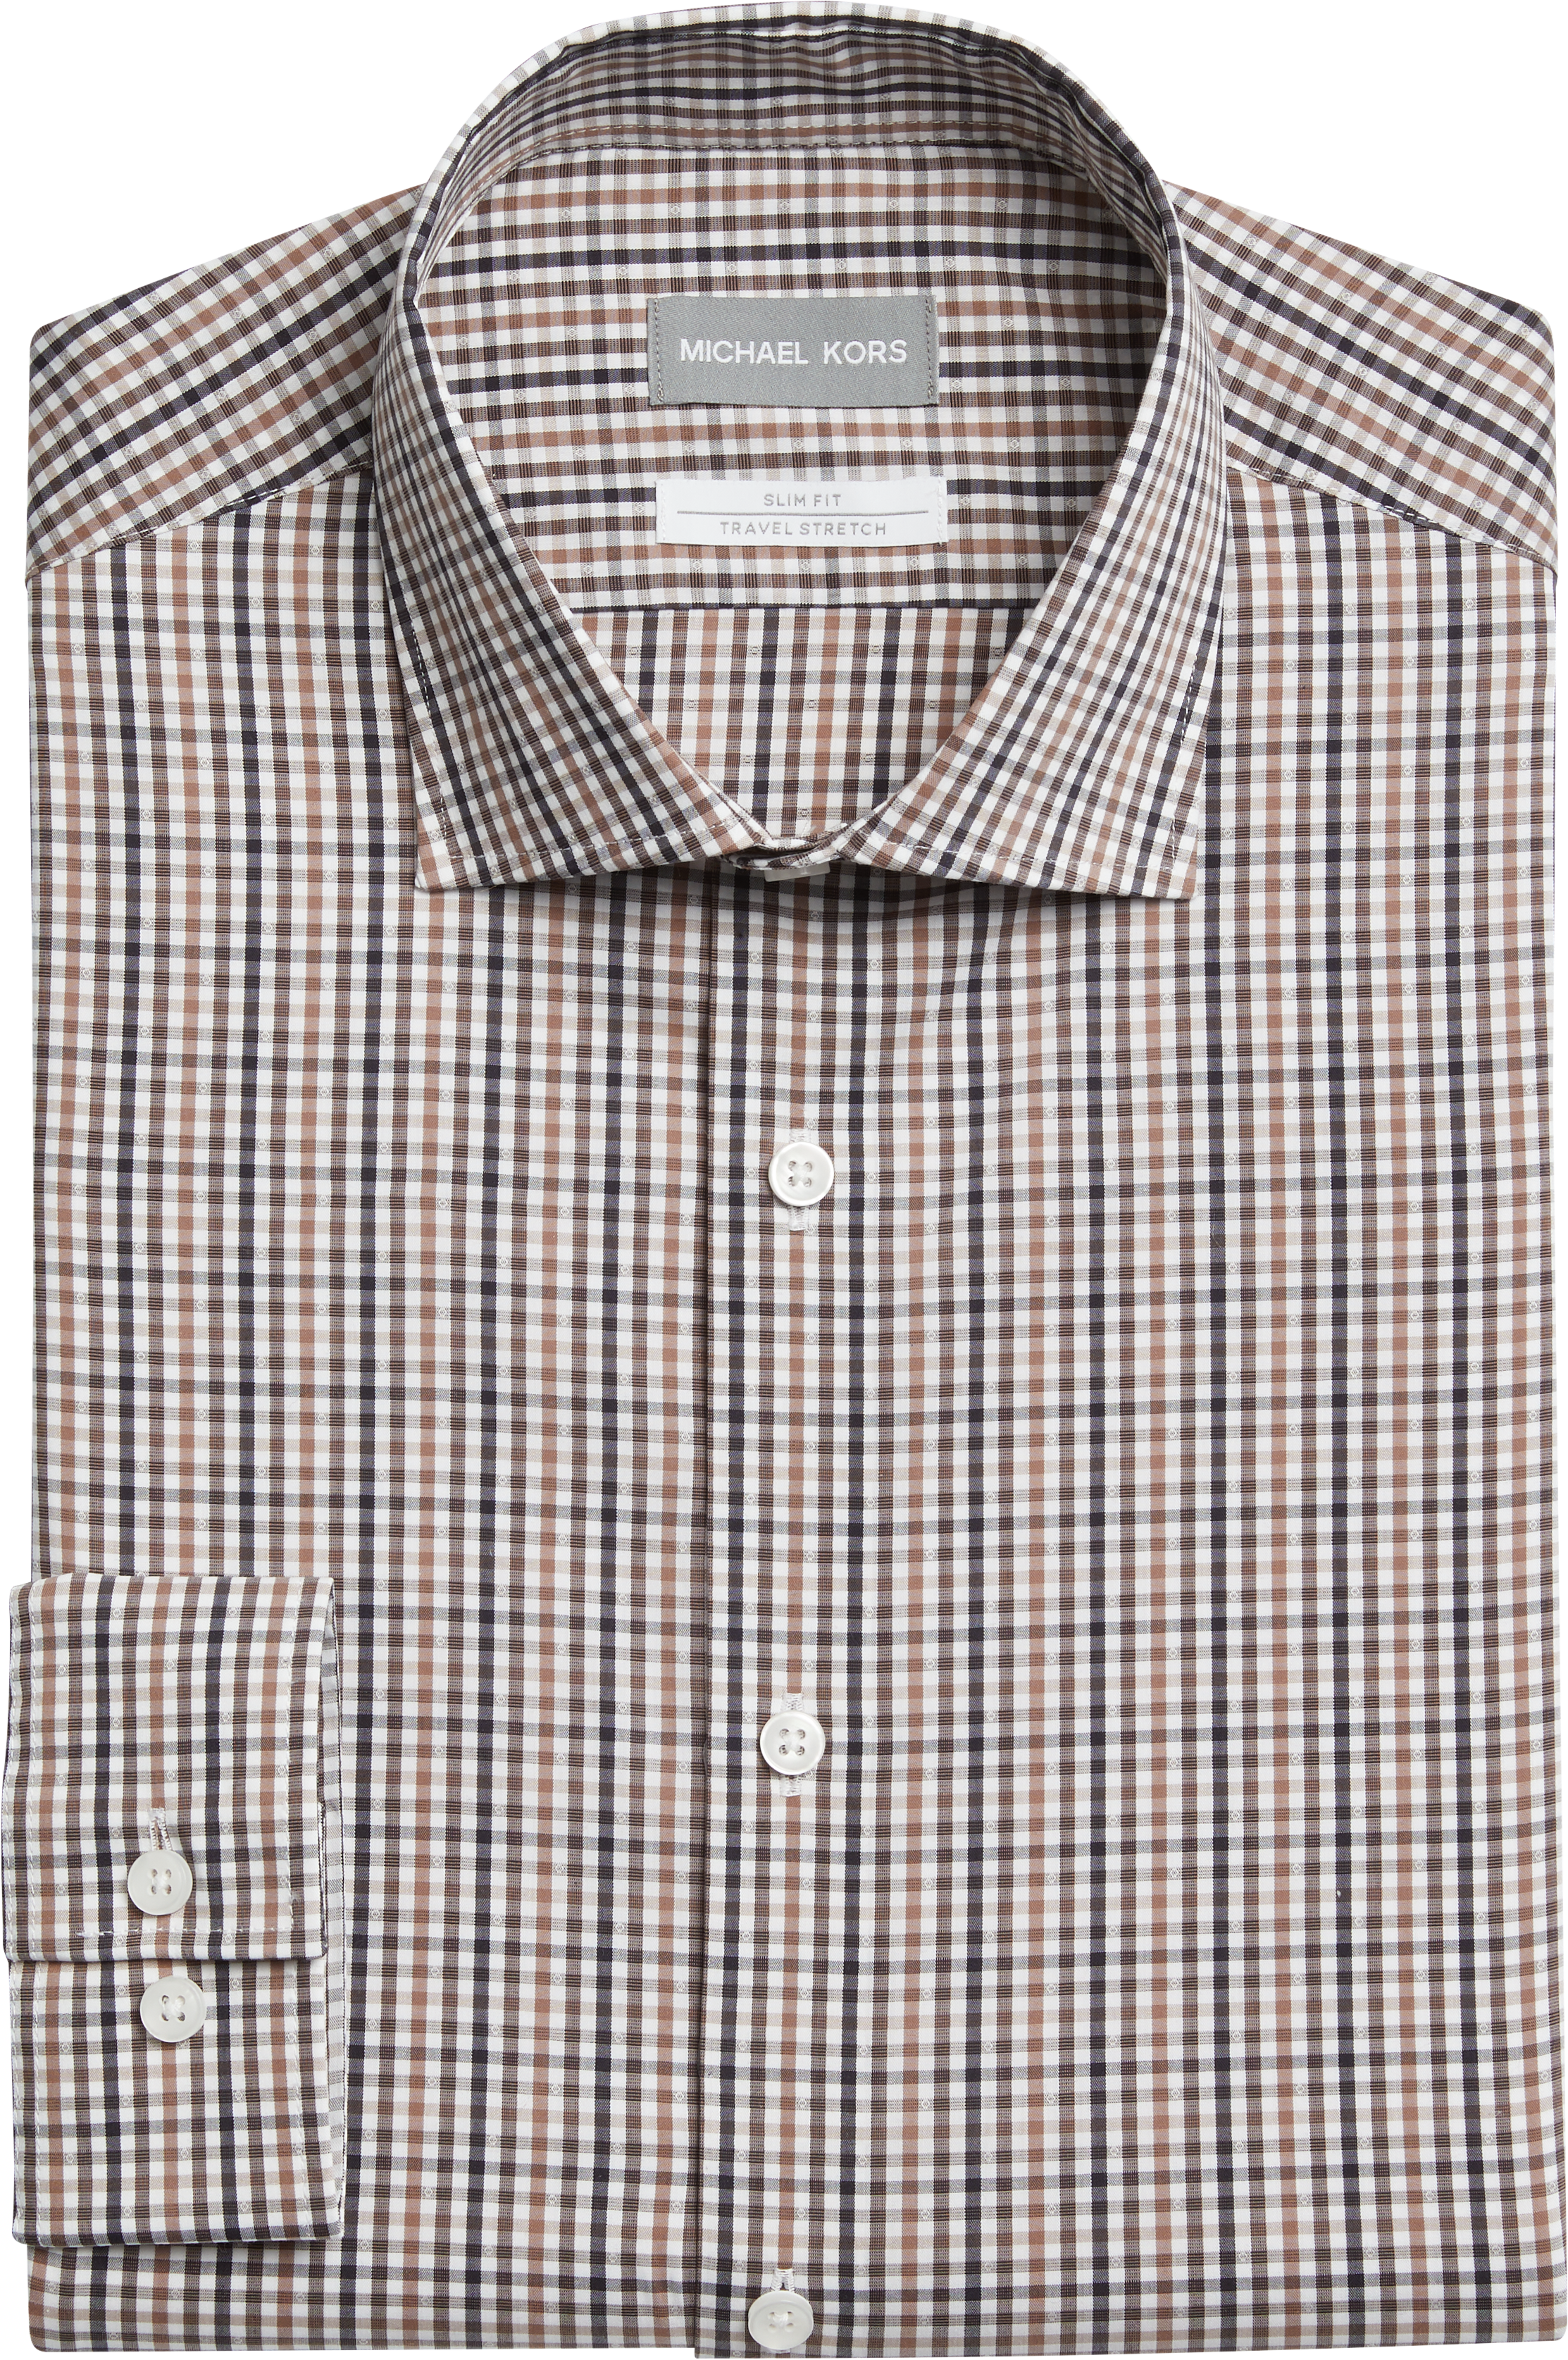 Michael Kors Slim Fit Dress Shirt, Brown Check - Men's Shirts | Men's ...